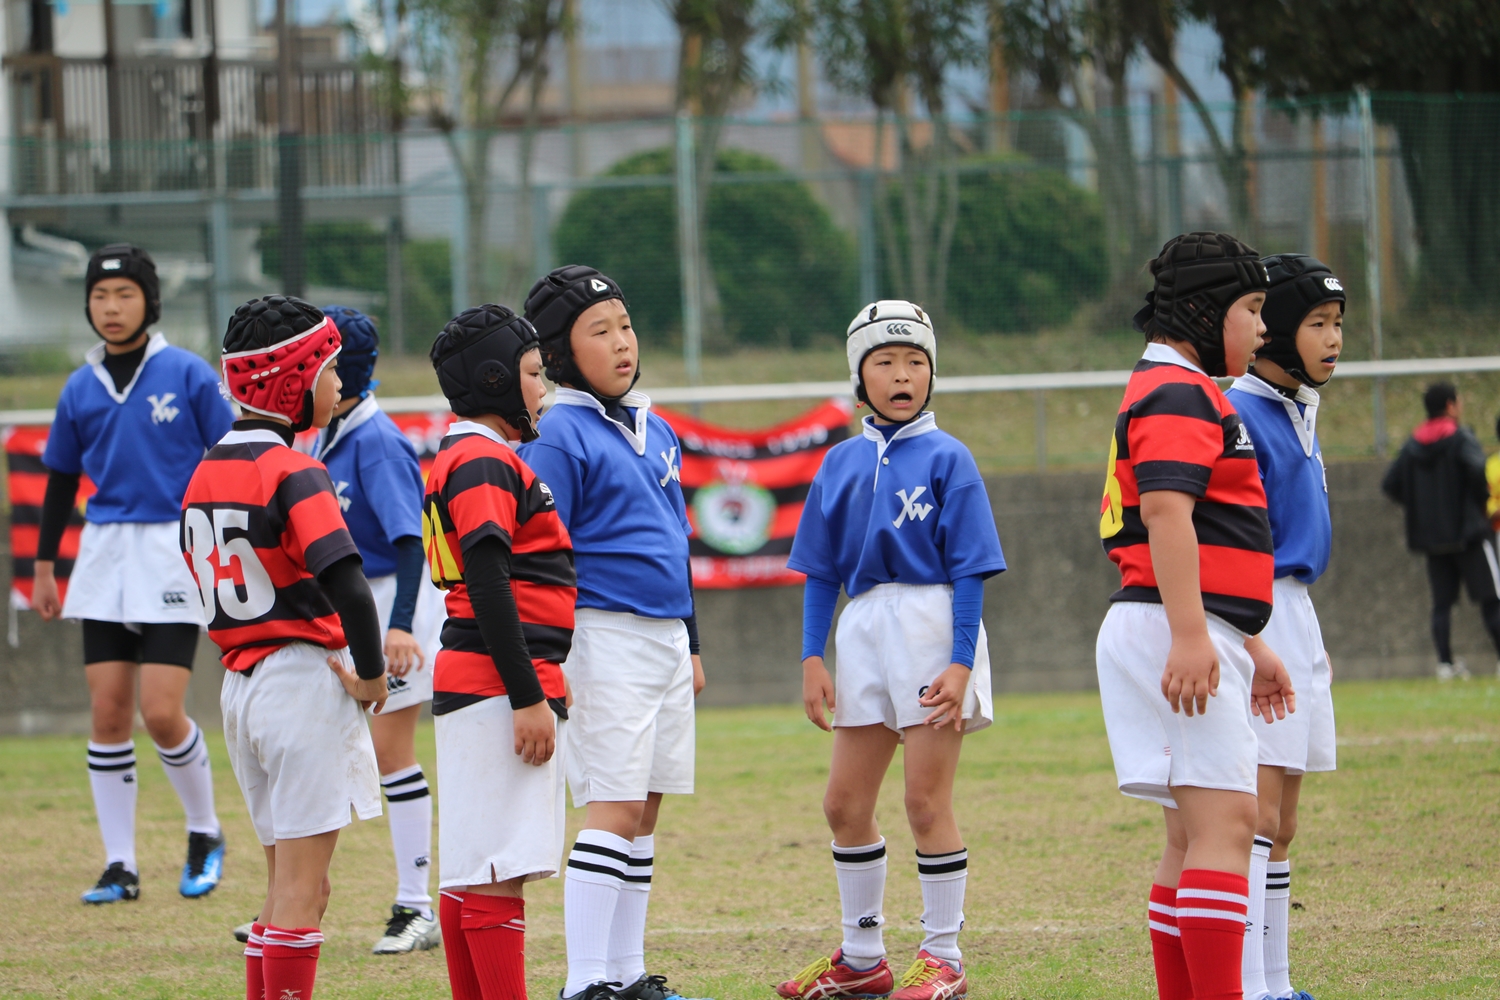 youngwave_kitakyusyu_rugby_school_kasugahai2016002.JPG